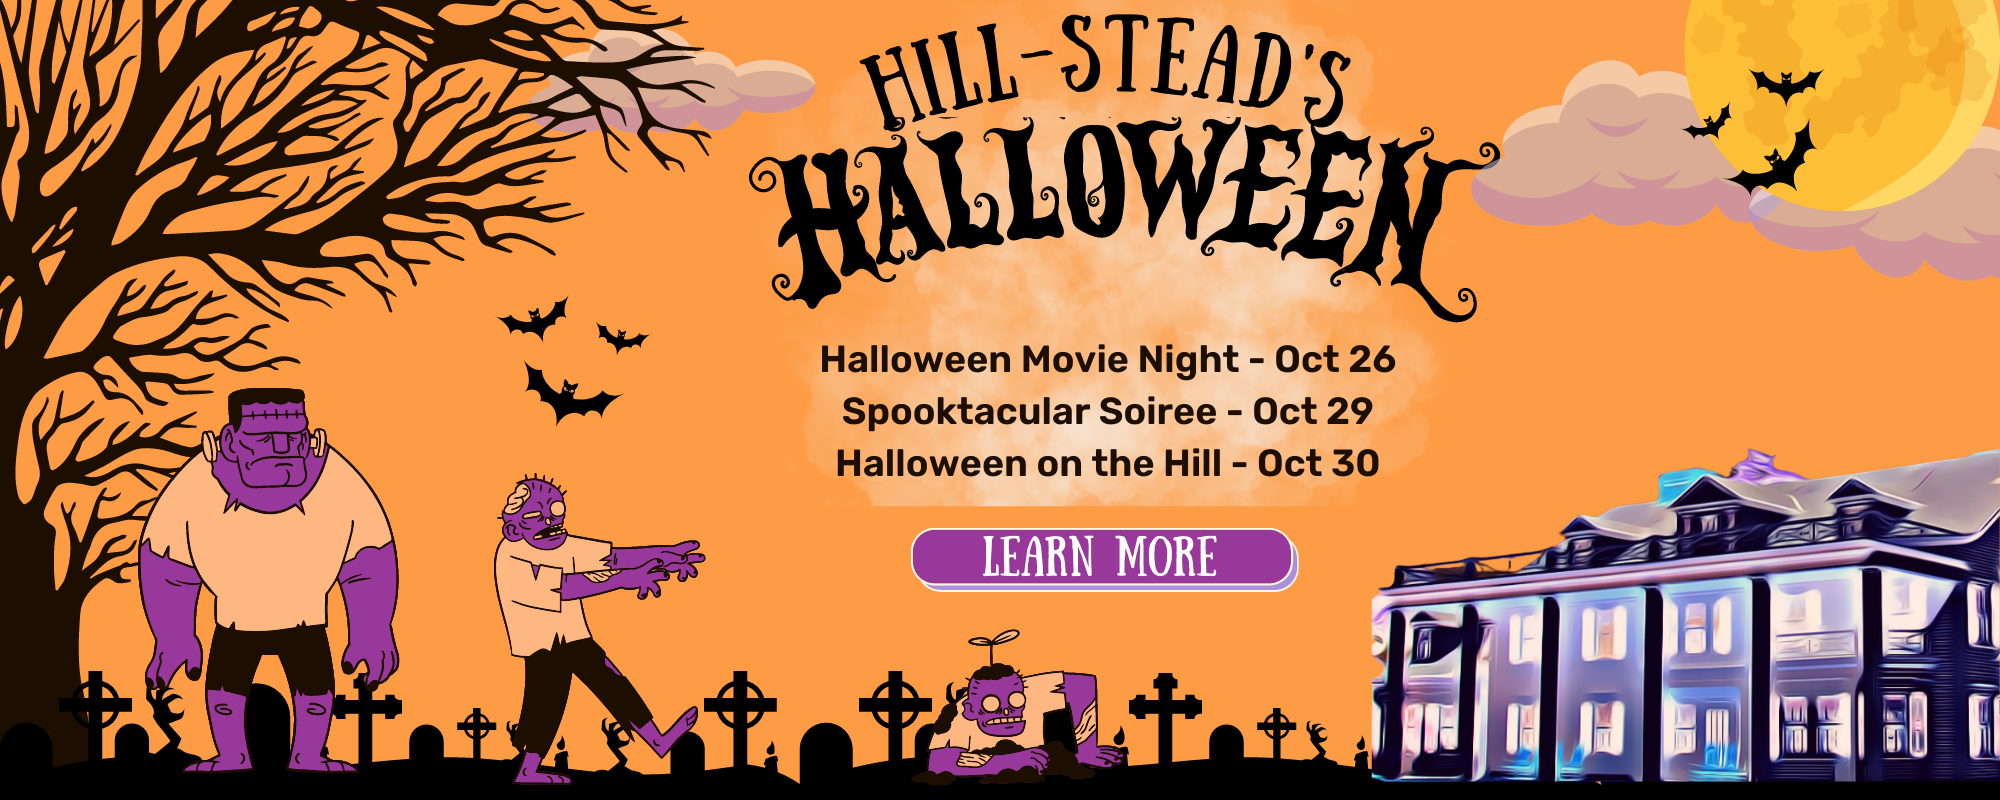 Halloween celebration at Hill-Stead